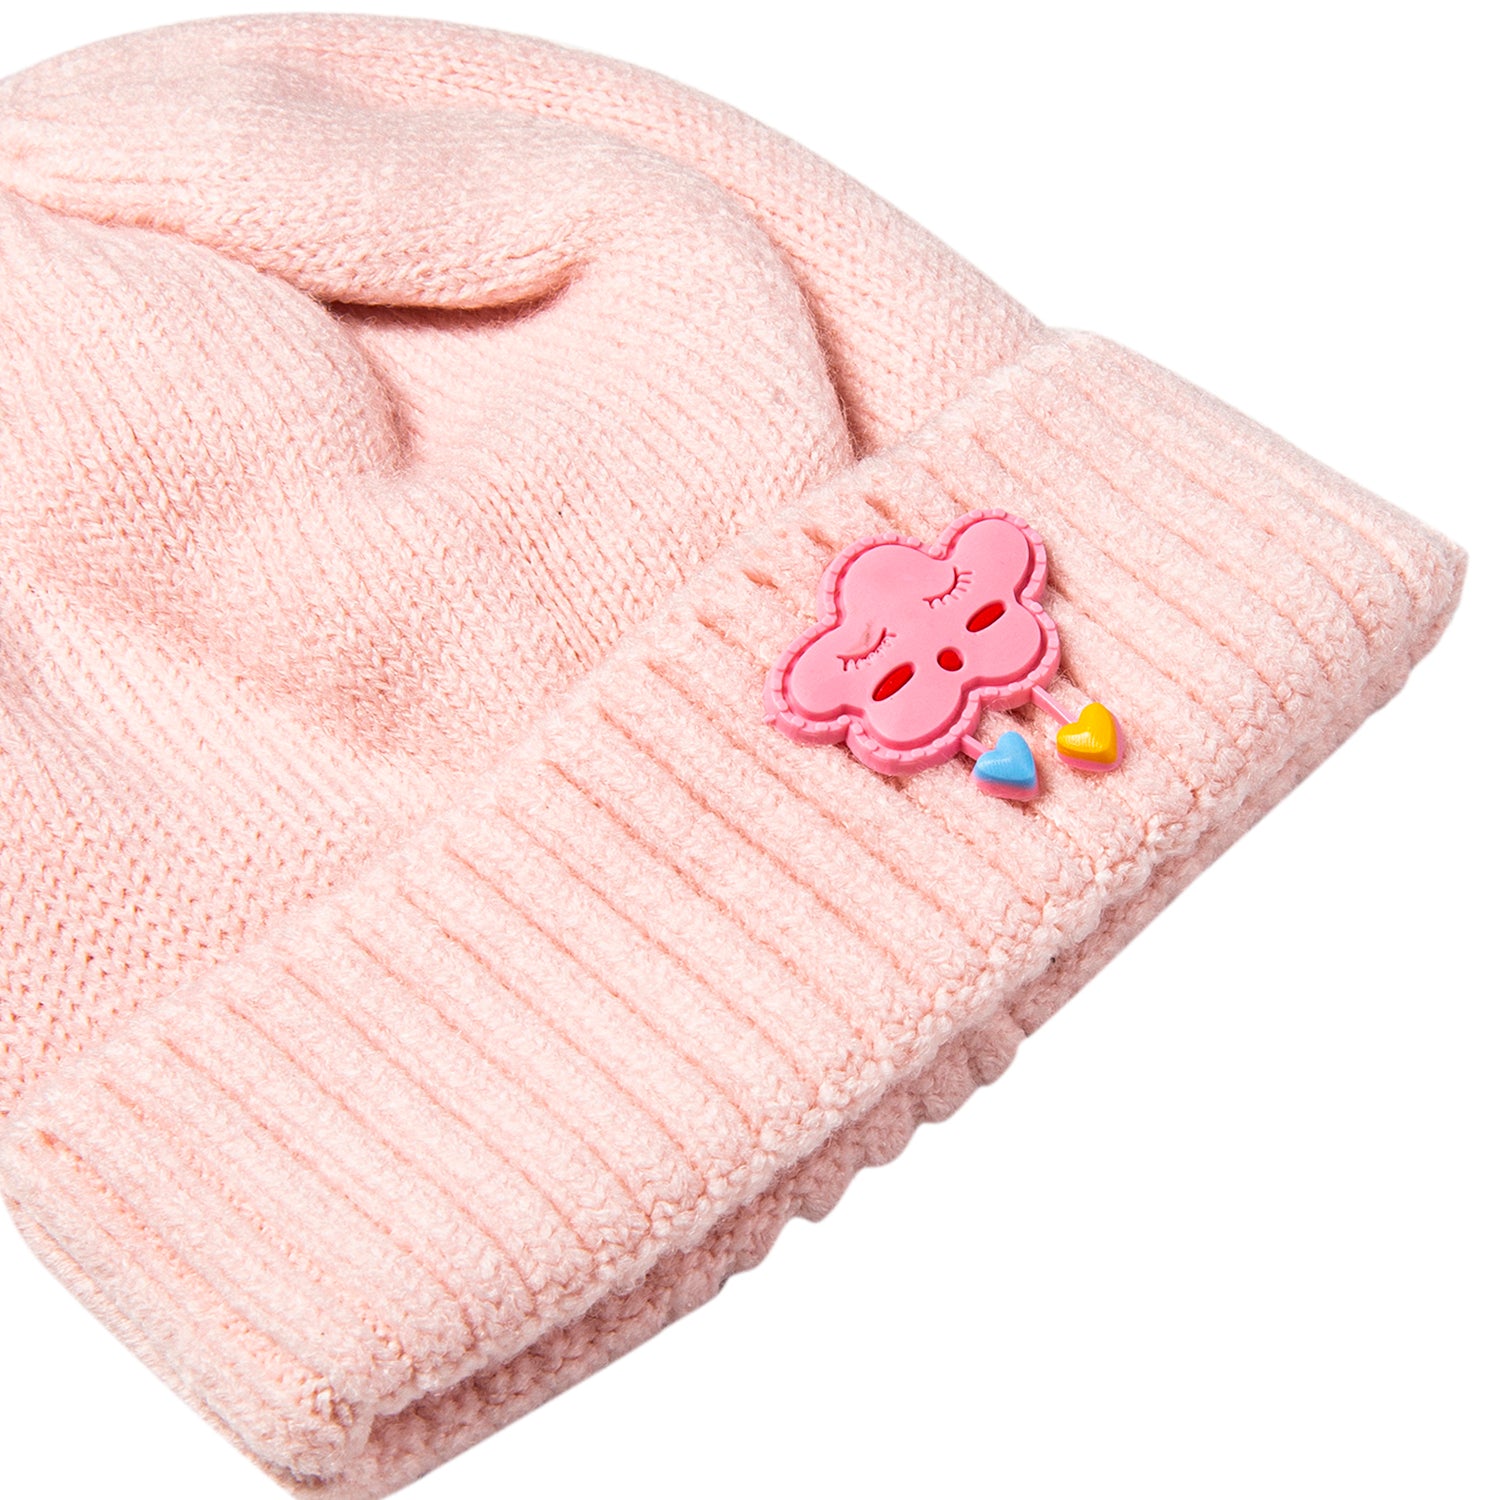 Knit Woollen Cap Winter Beanie Cloud Pink - Baby Moo